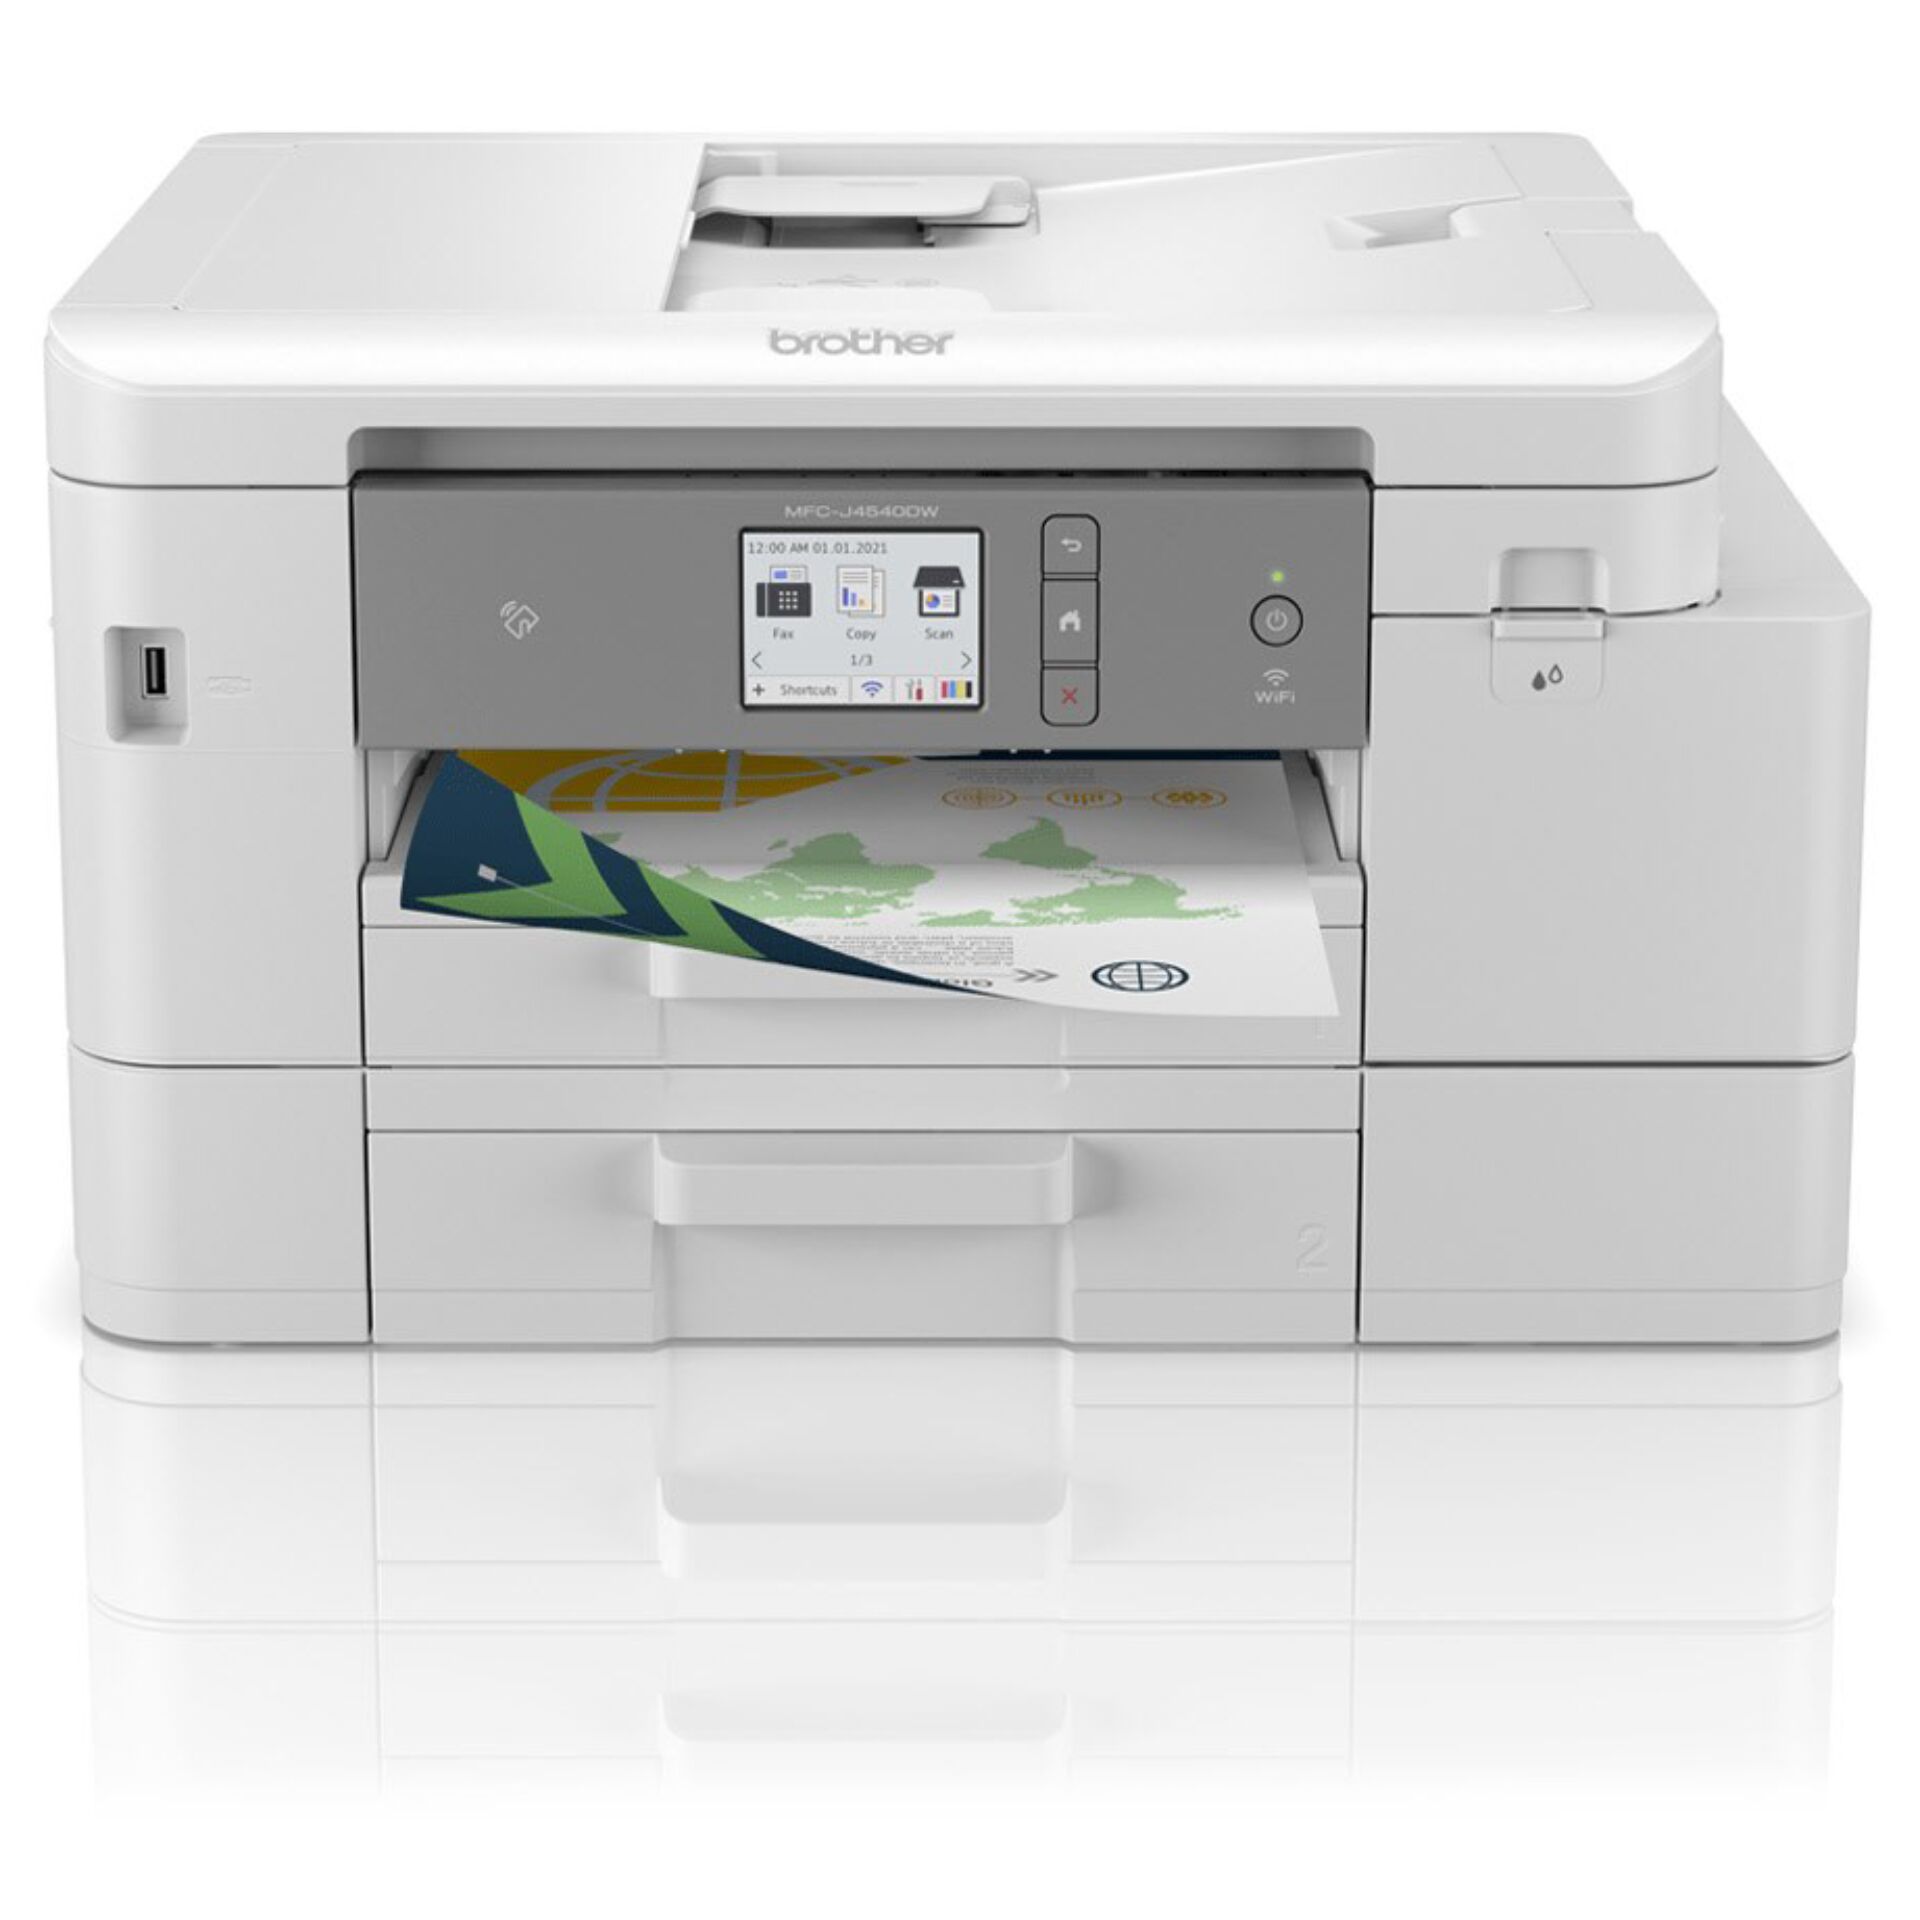 Brother MFC-J4540DW, WLAN, Tinte, mehrfarbig-Multifunktions- gerät Drucker/Scanner/Kopierer/Fax